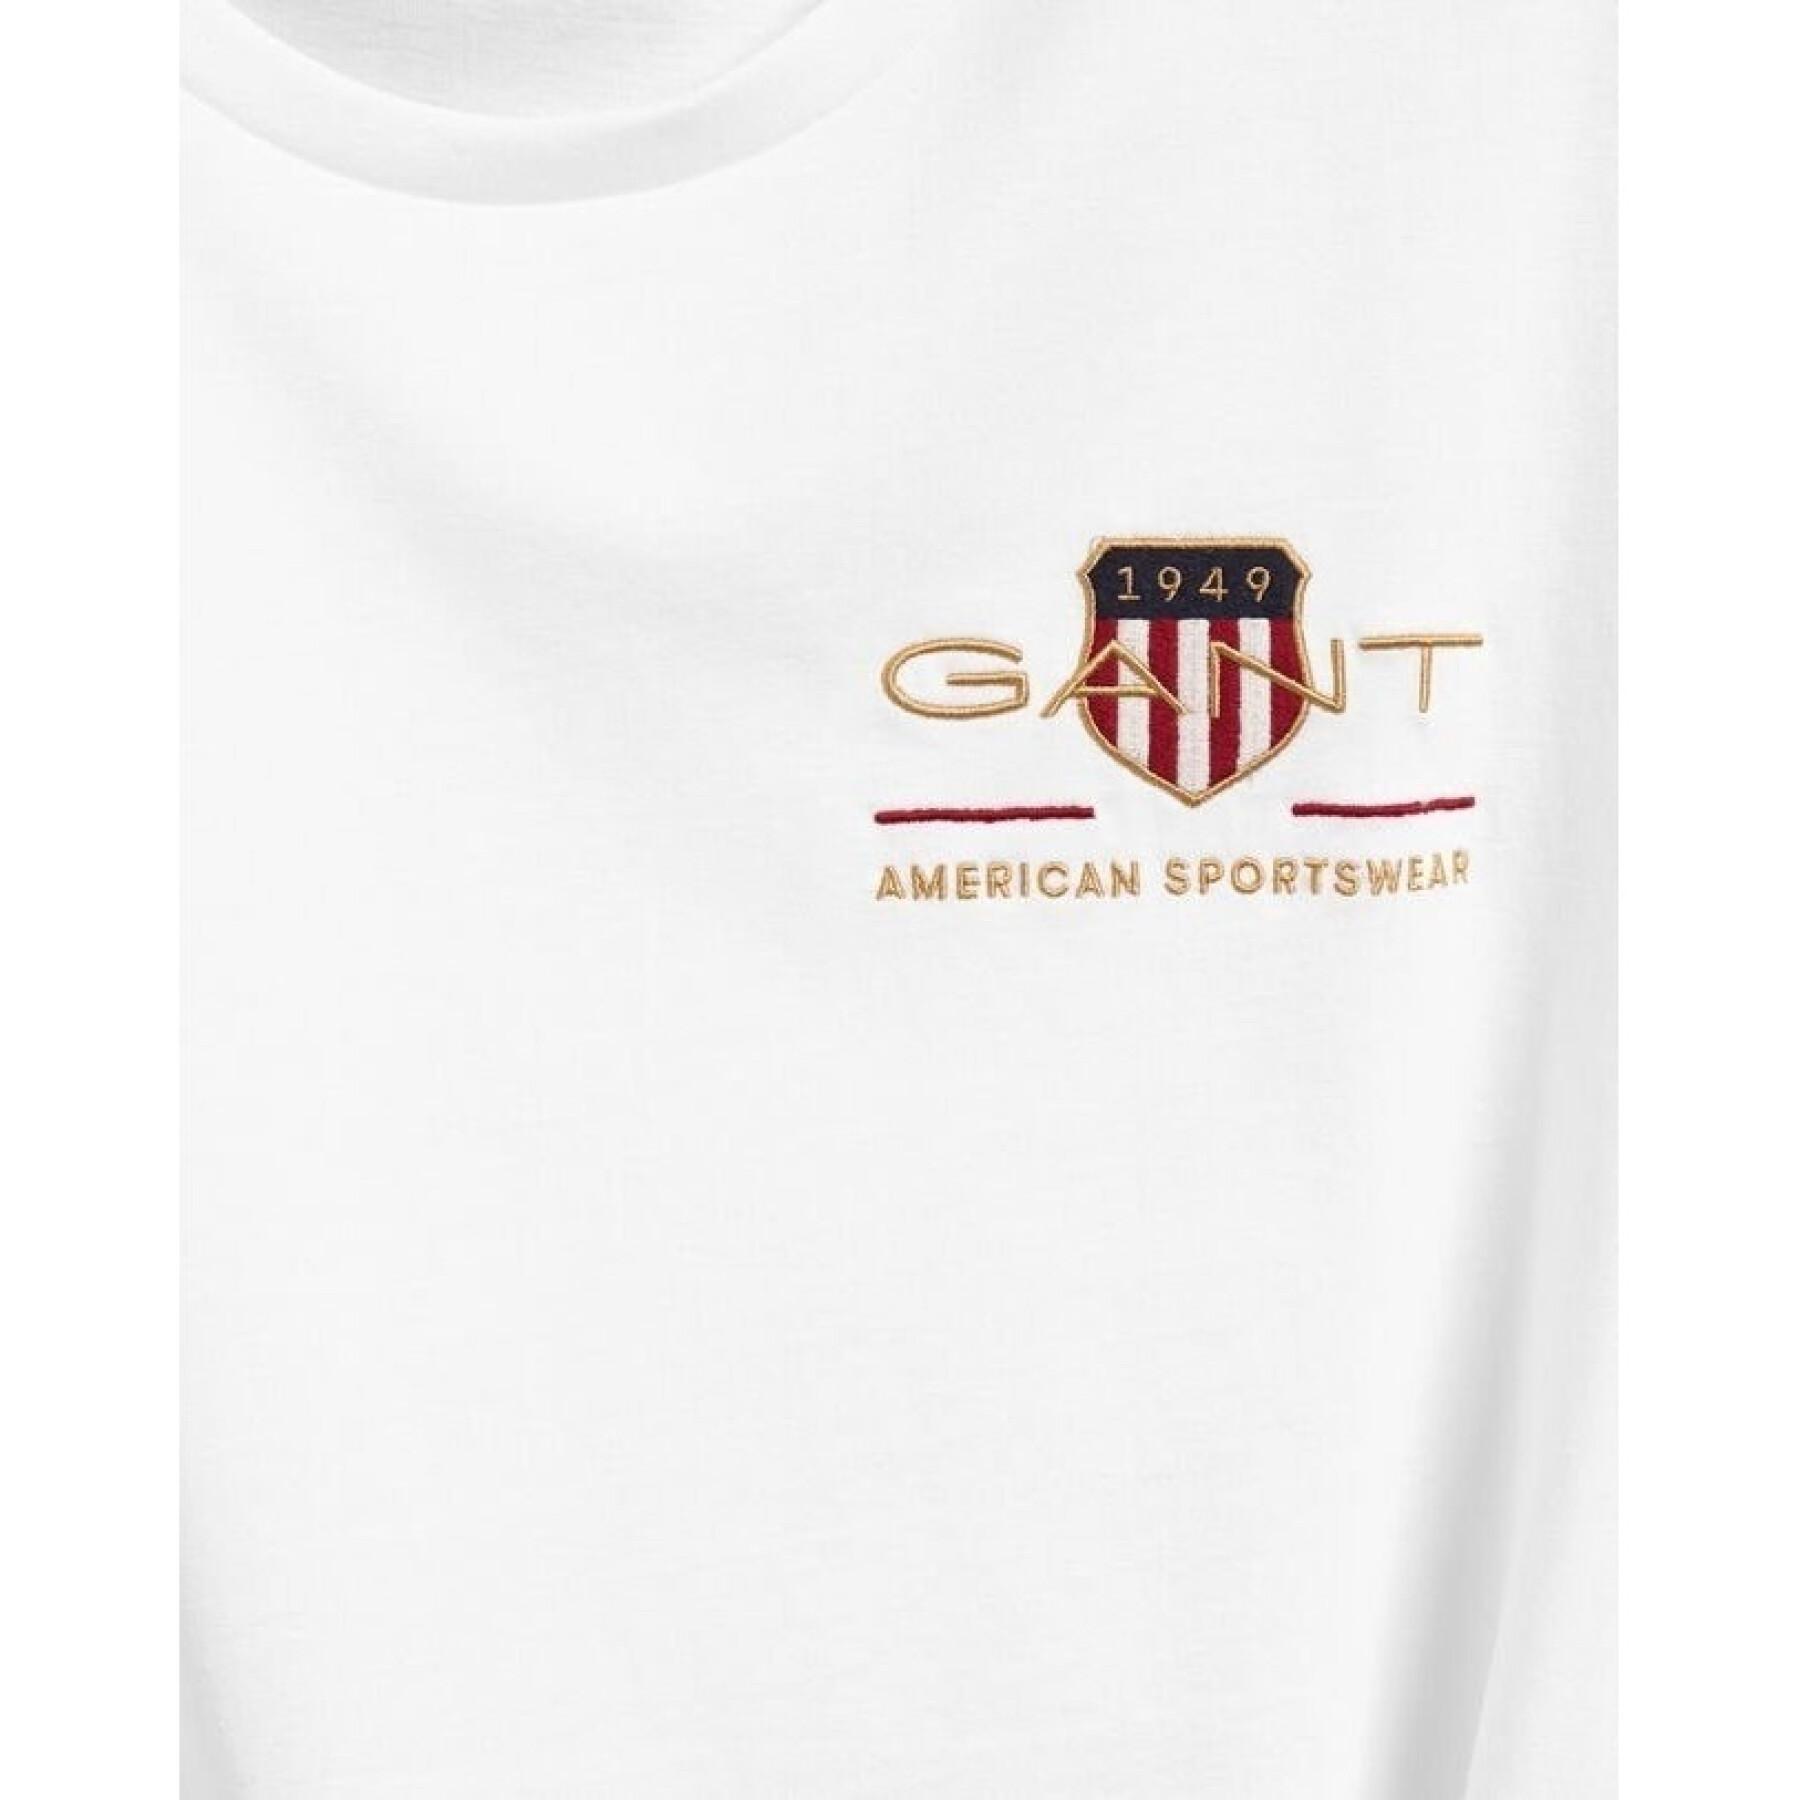 Camiseta bordada Gant Archive Shield